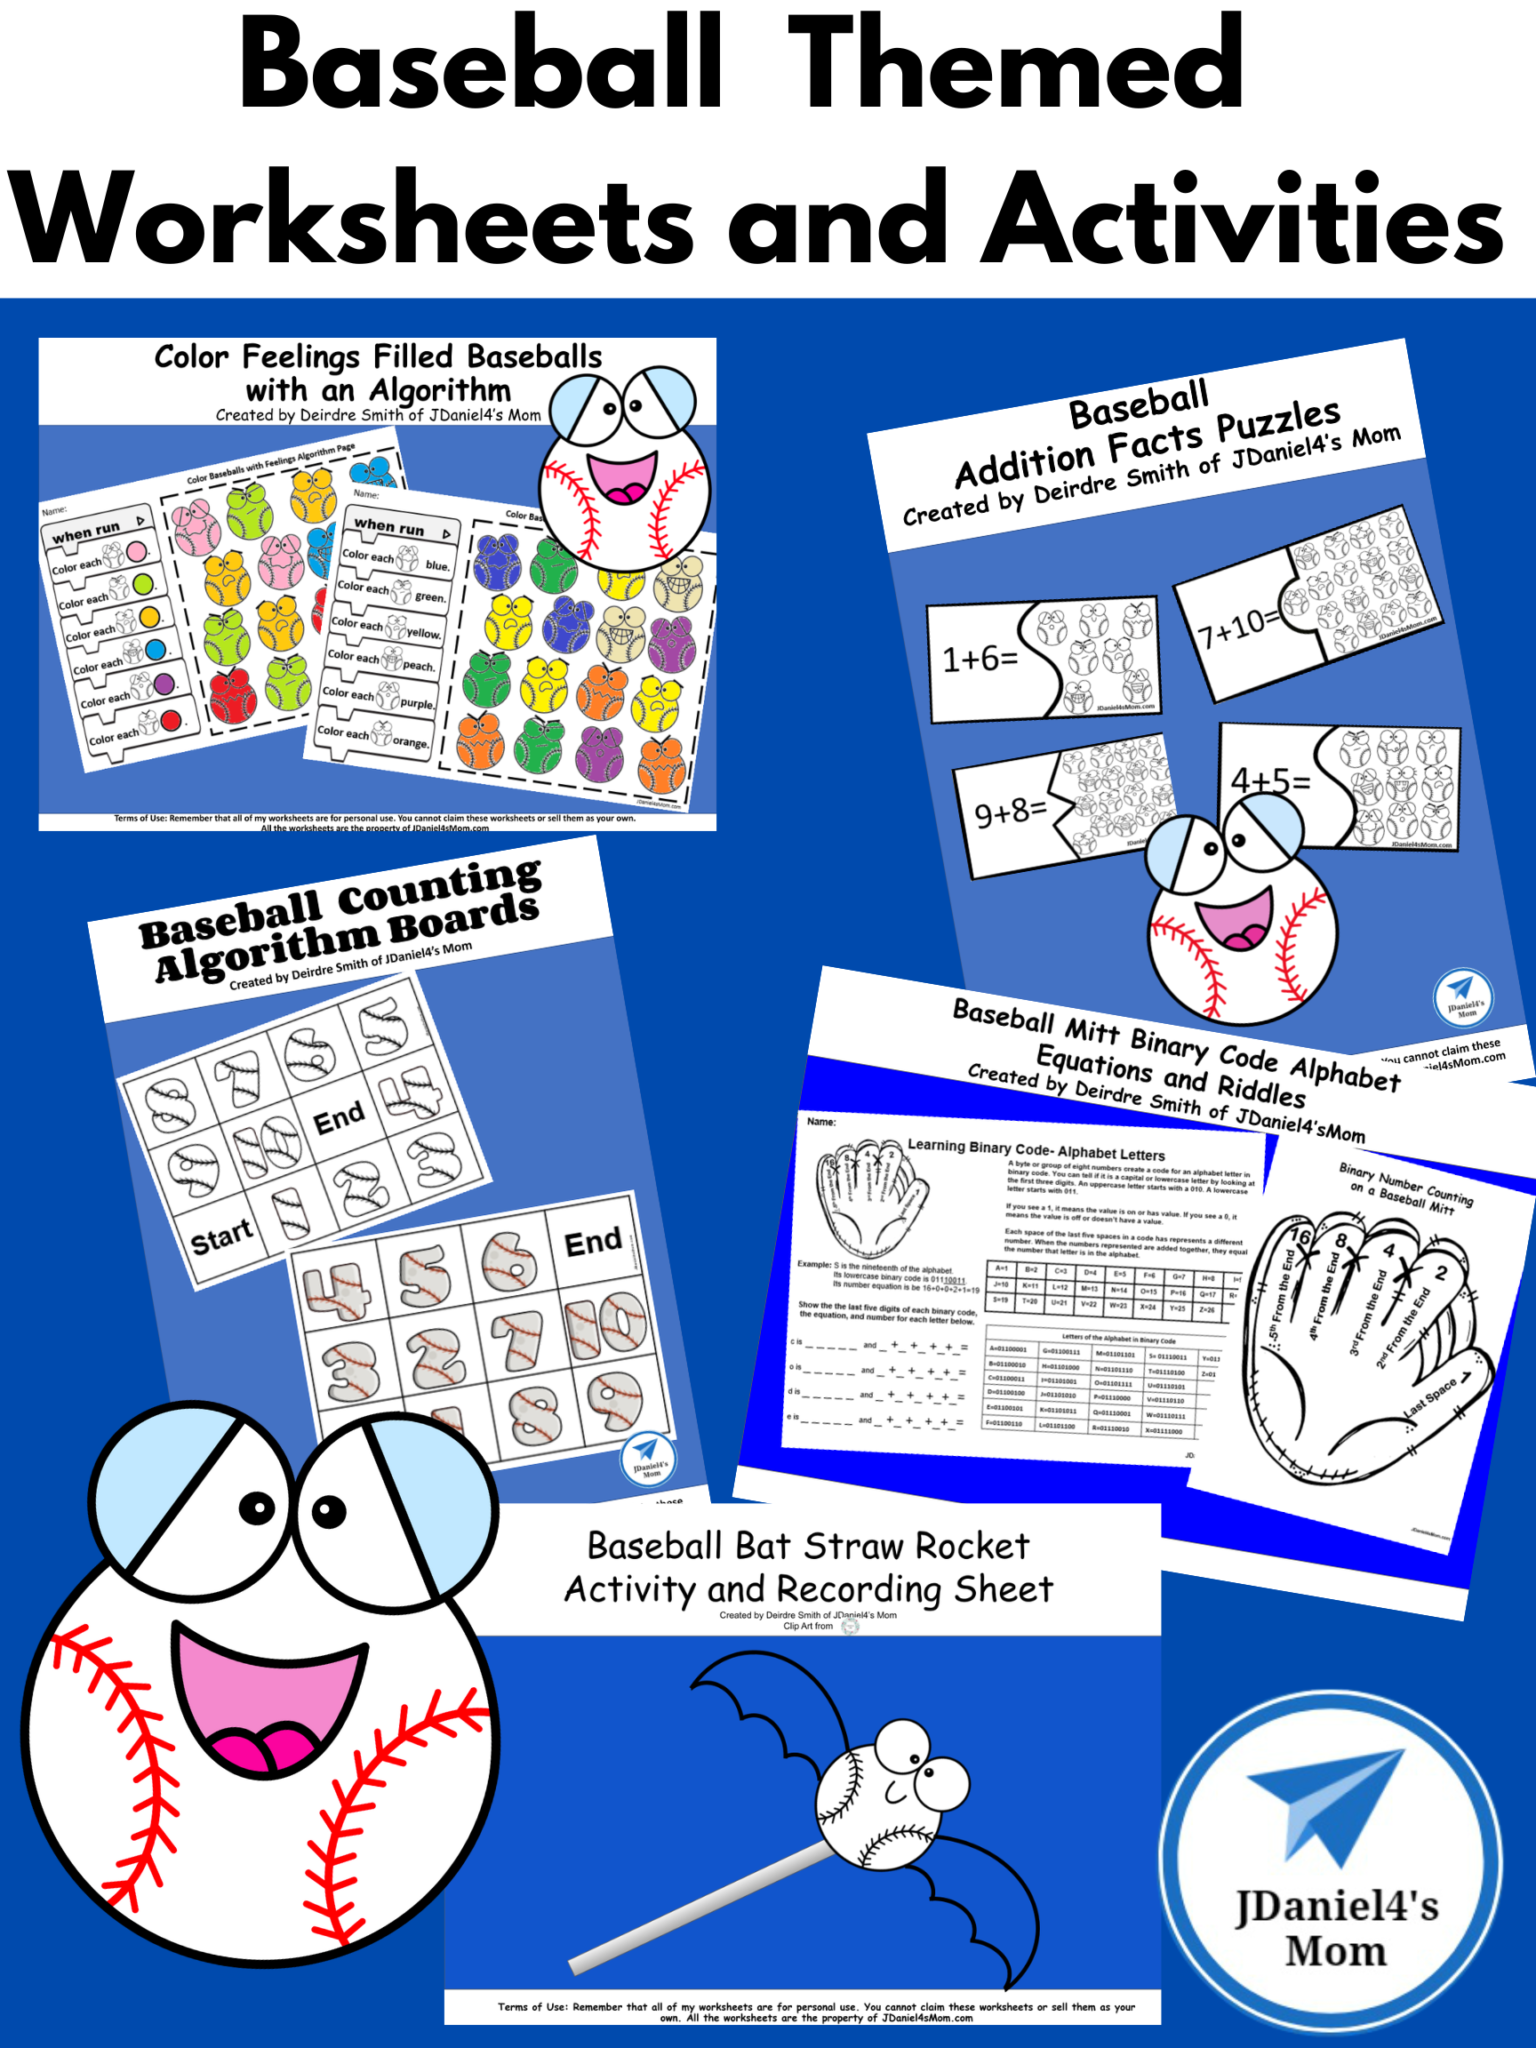 baseball-themed-worksheets-and-activities-jdaniel4s-mom